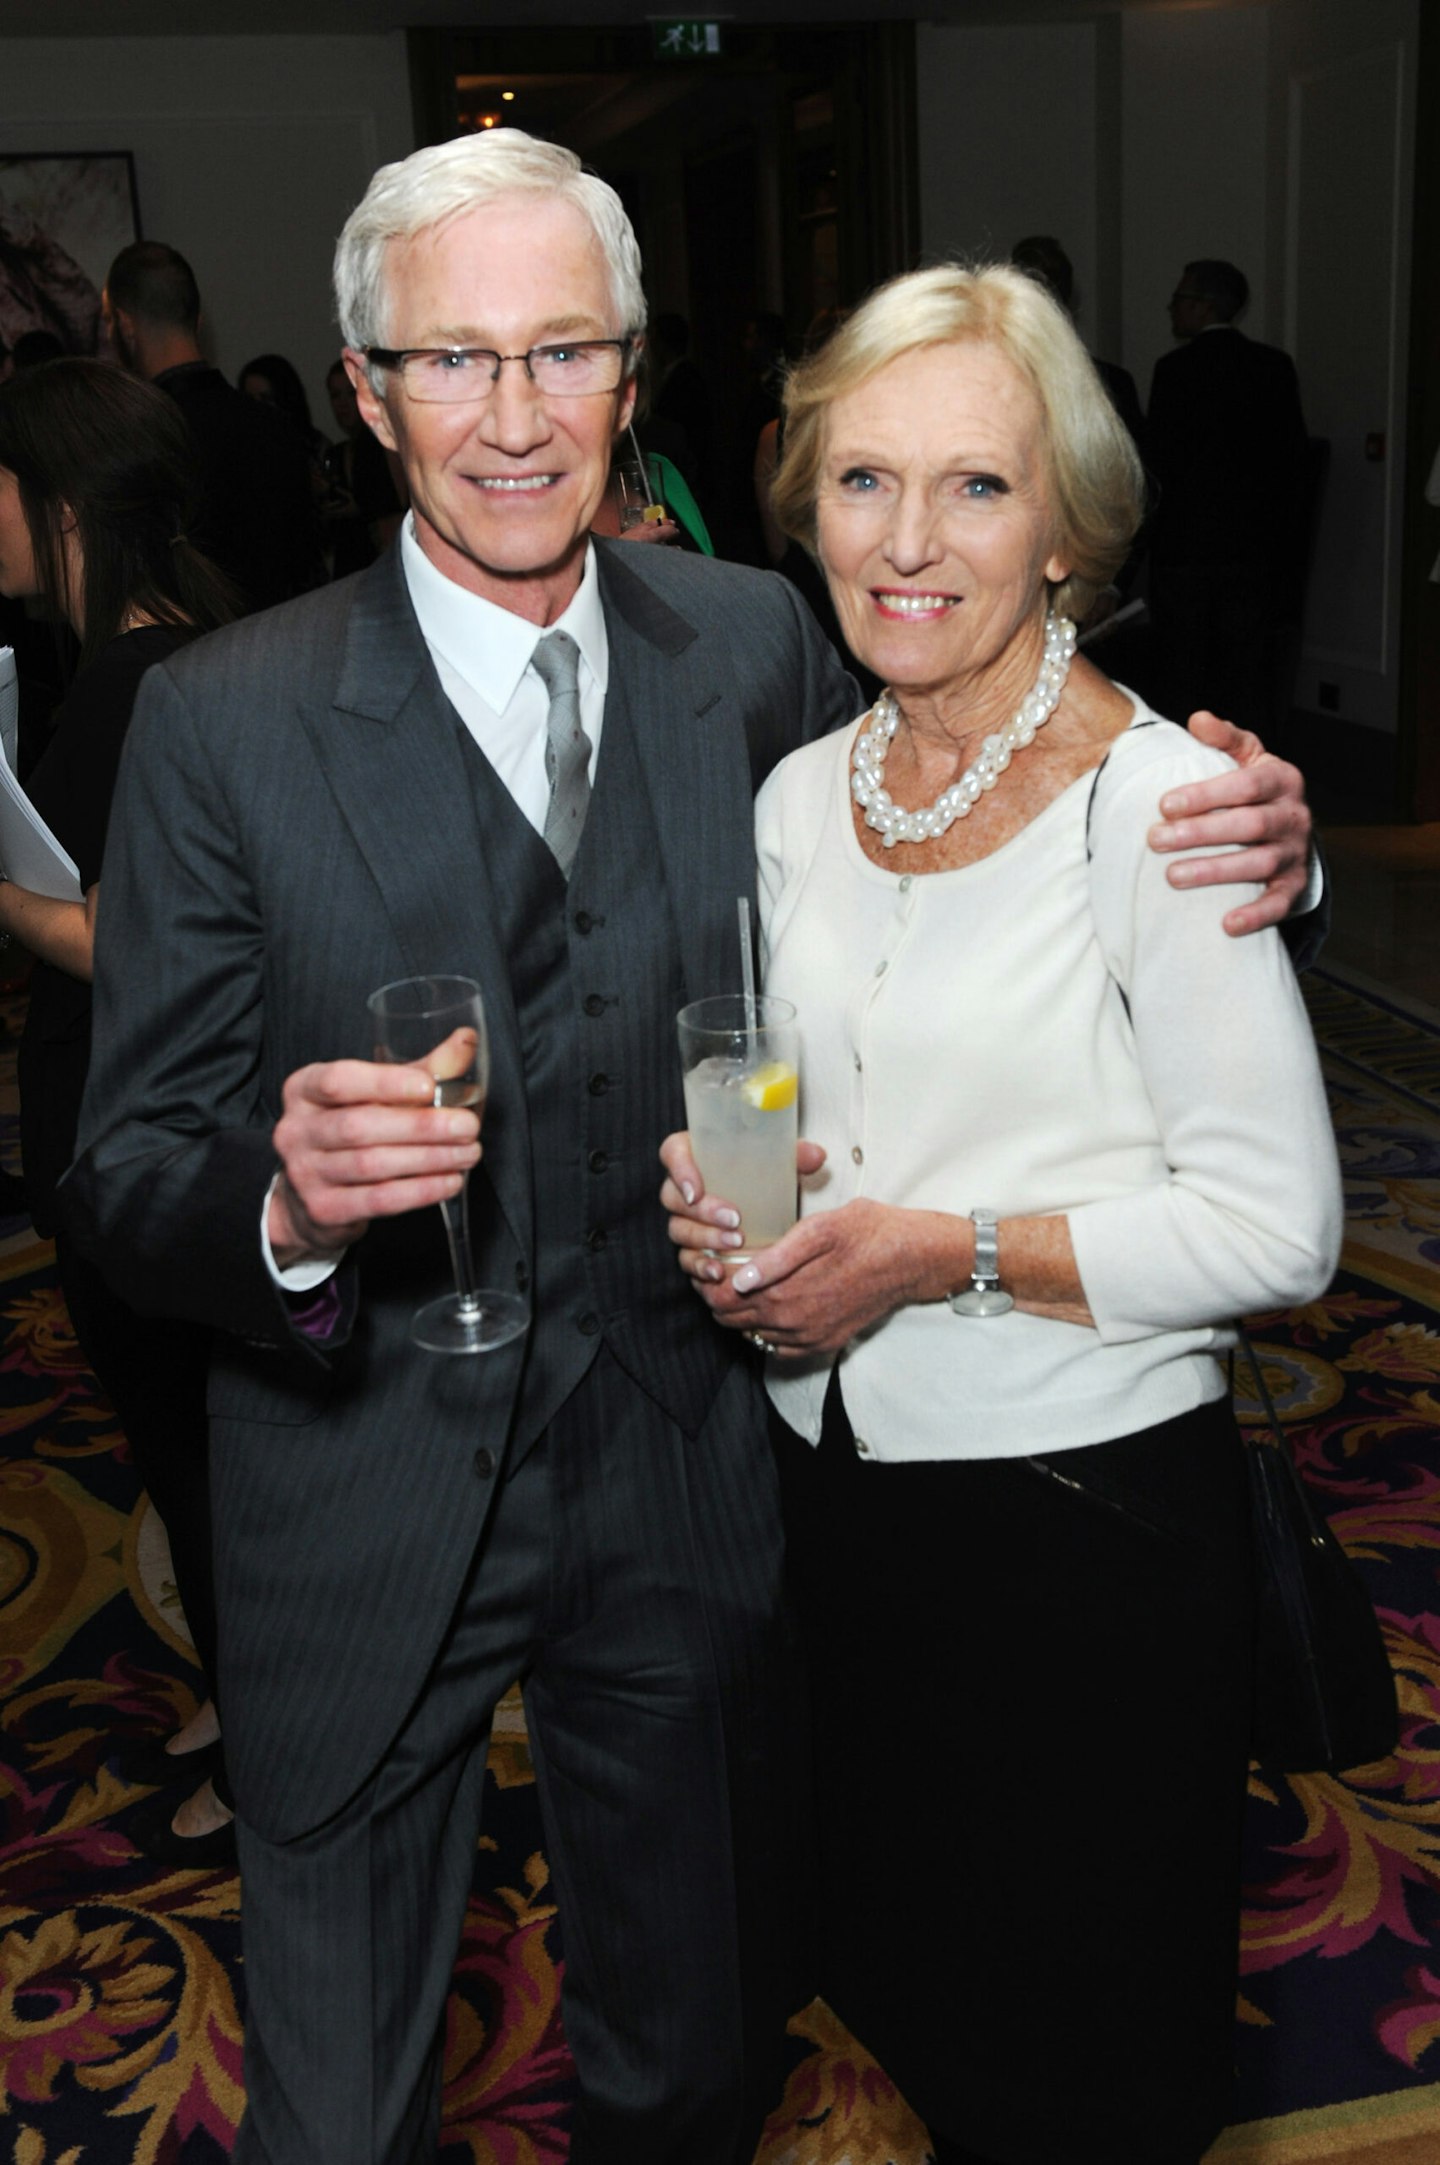 Paul O'Grady with Mary Berry